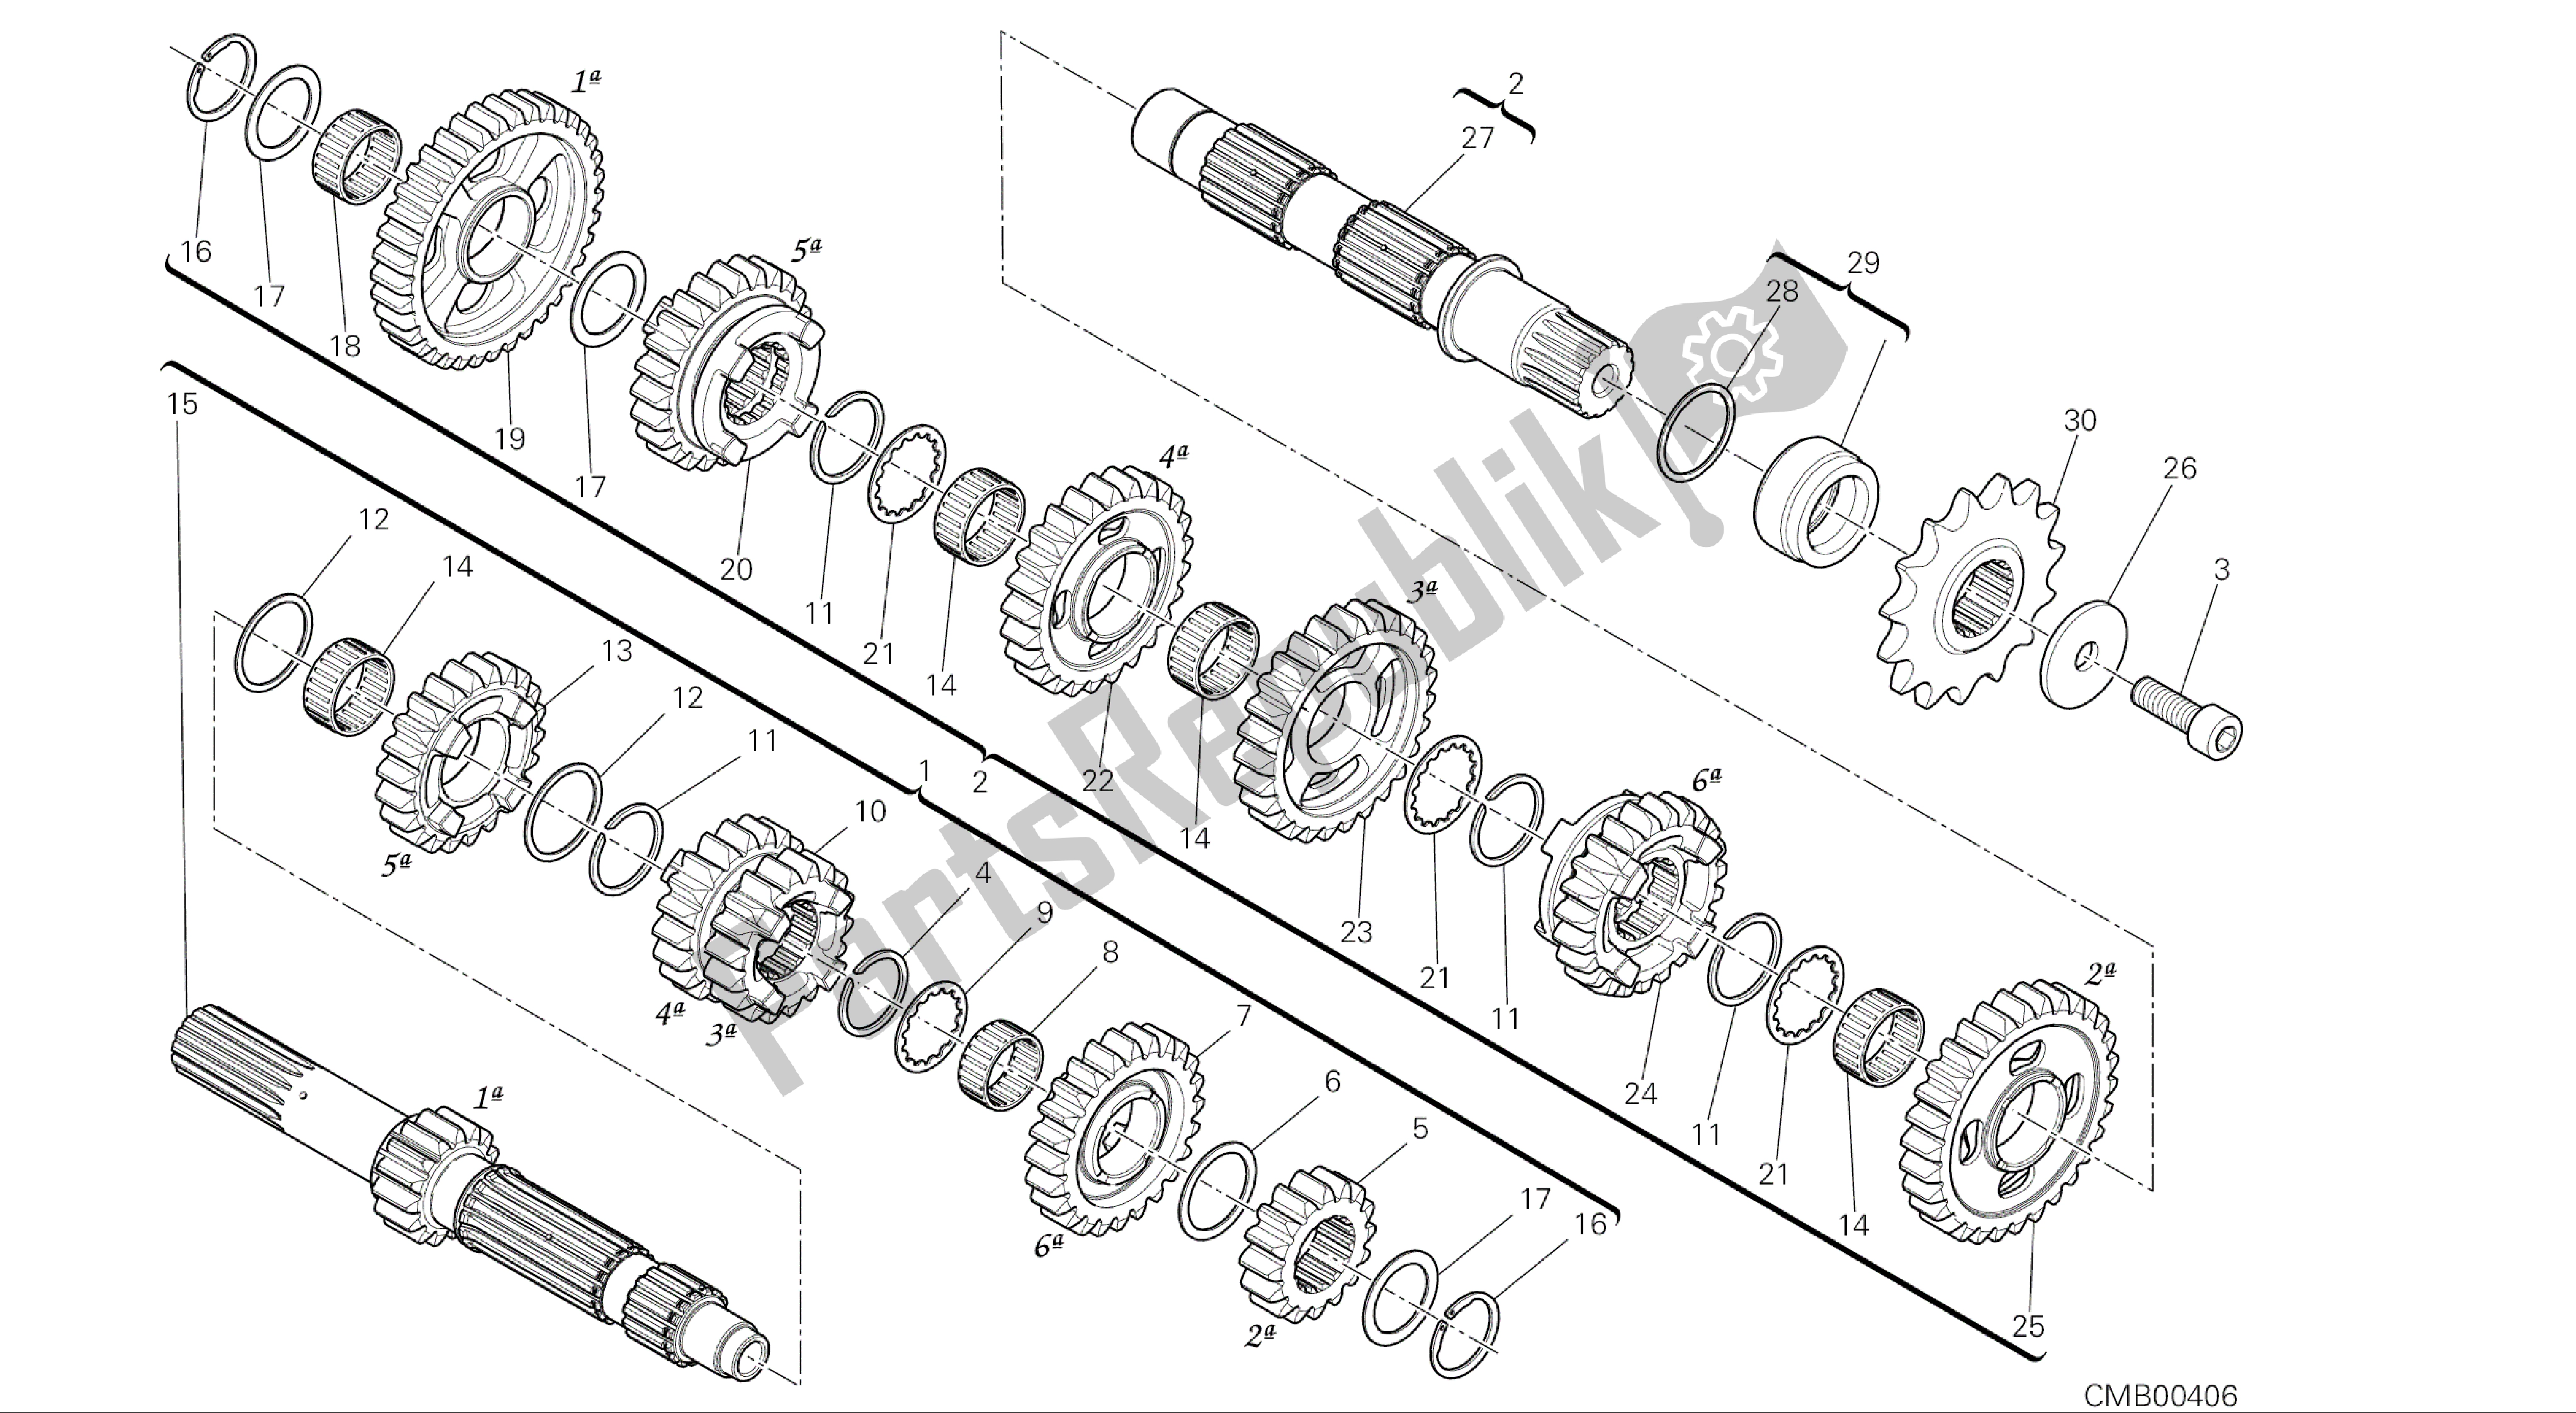 Alle onderdelen voor de Tekening 003 - Versnellingsbak [mod: 1299; Xst: Aus, Eur, Fra, Jap, Twn] Groepsmotor van de Ducati Panigale ABS 1299 2016